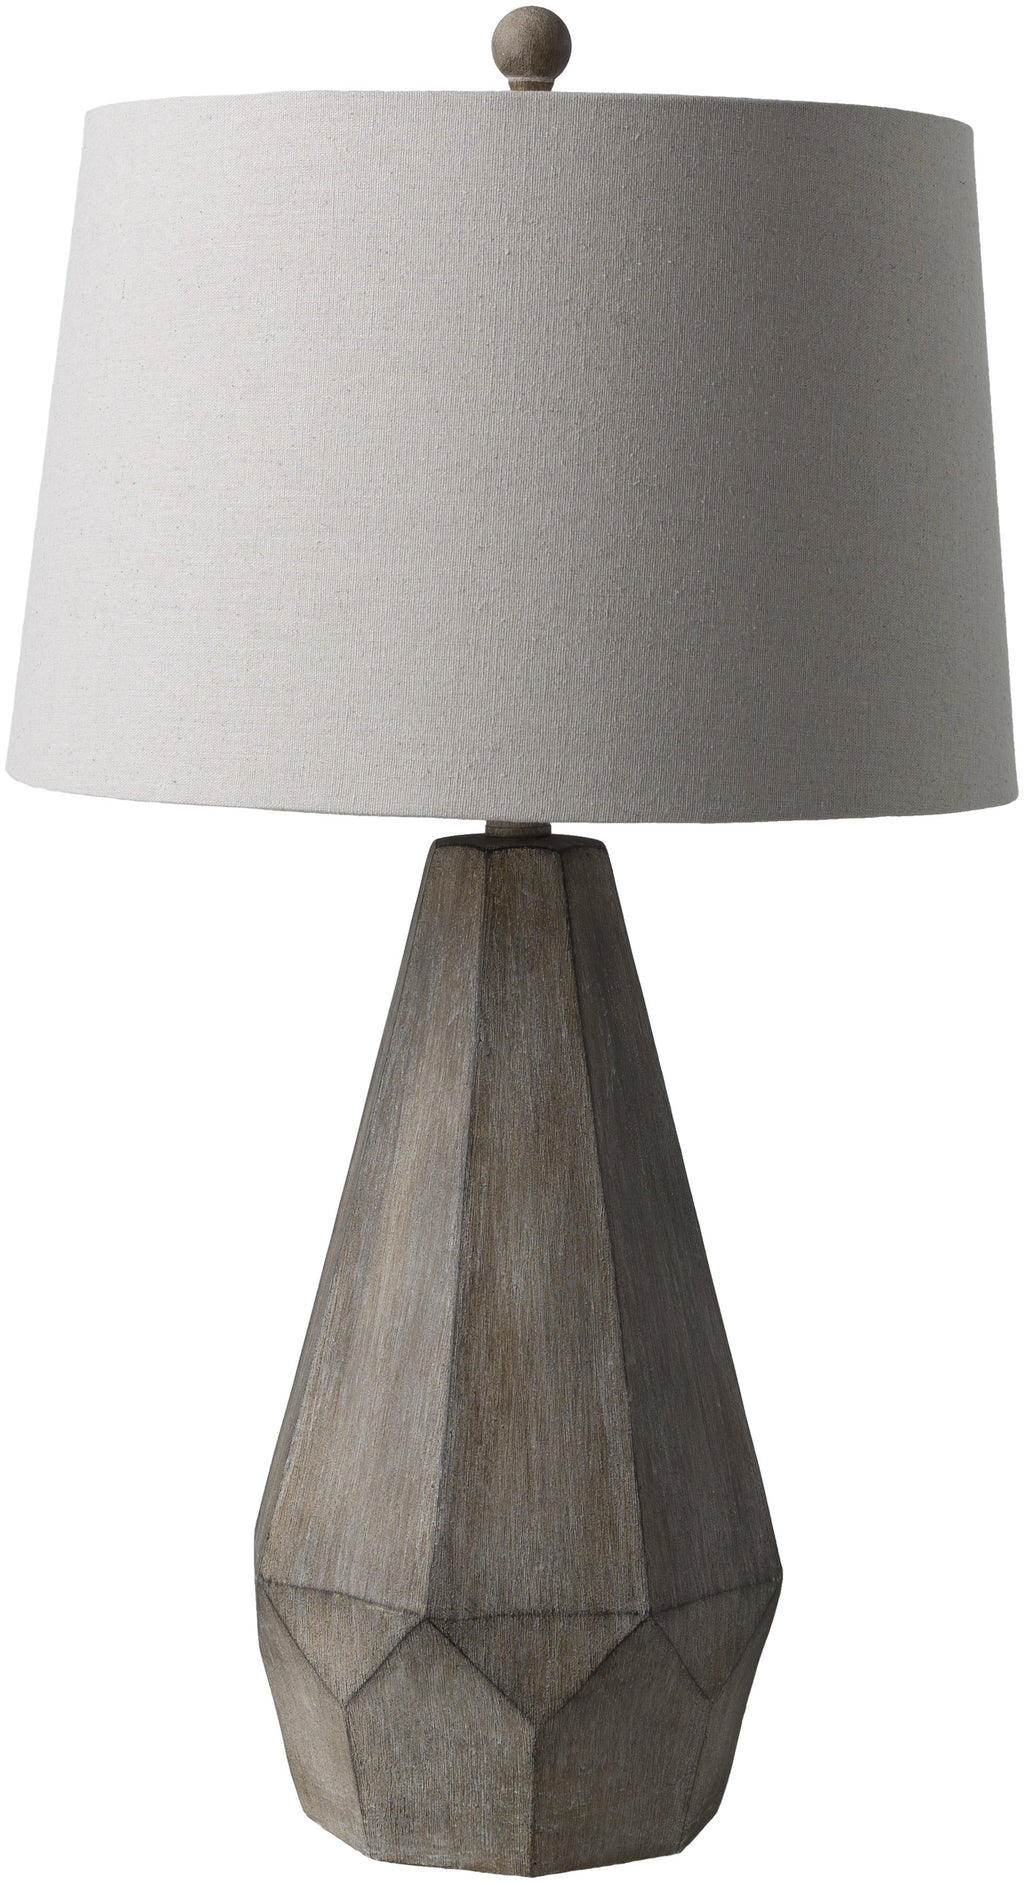 Draycott Table Lamp